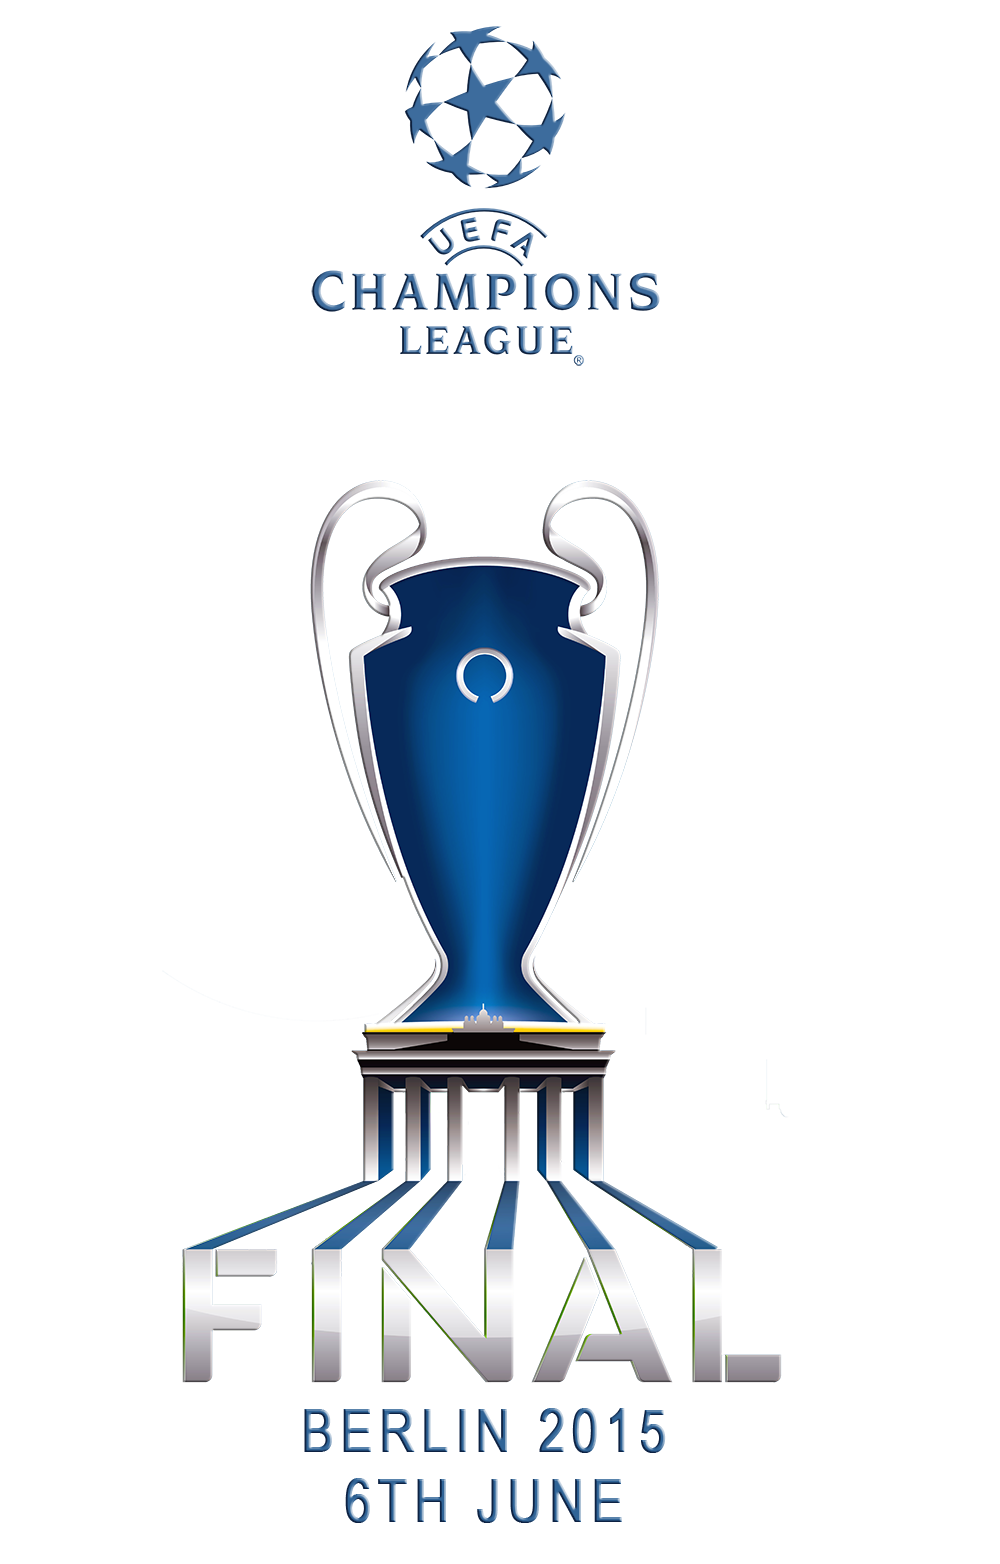 Logo champions league Berlin 2015 by ilnanny on DeviantArt